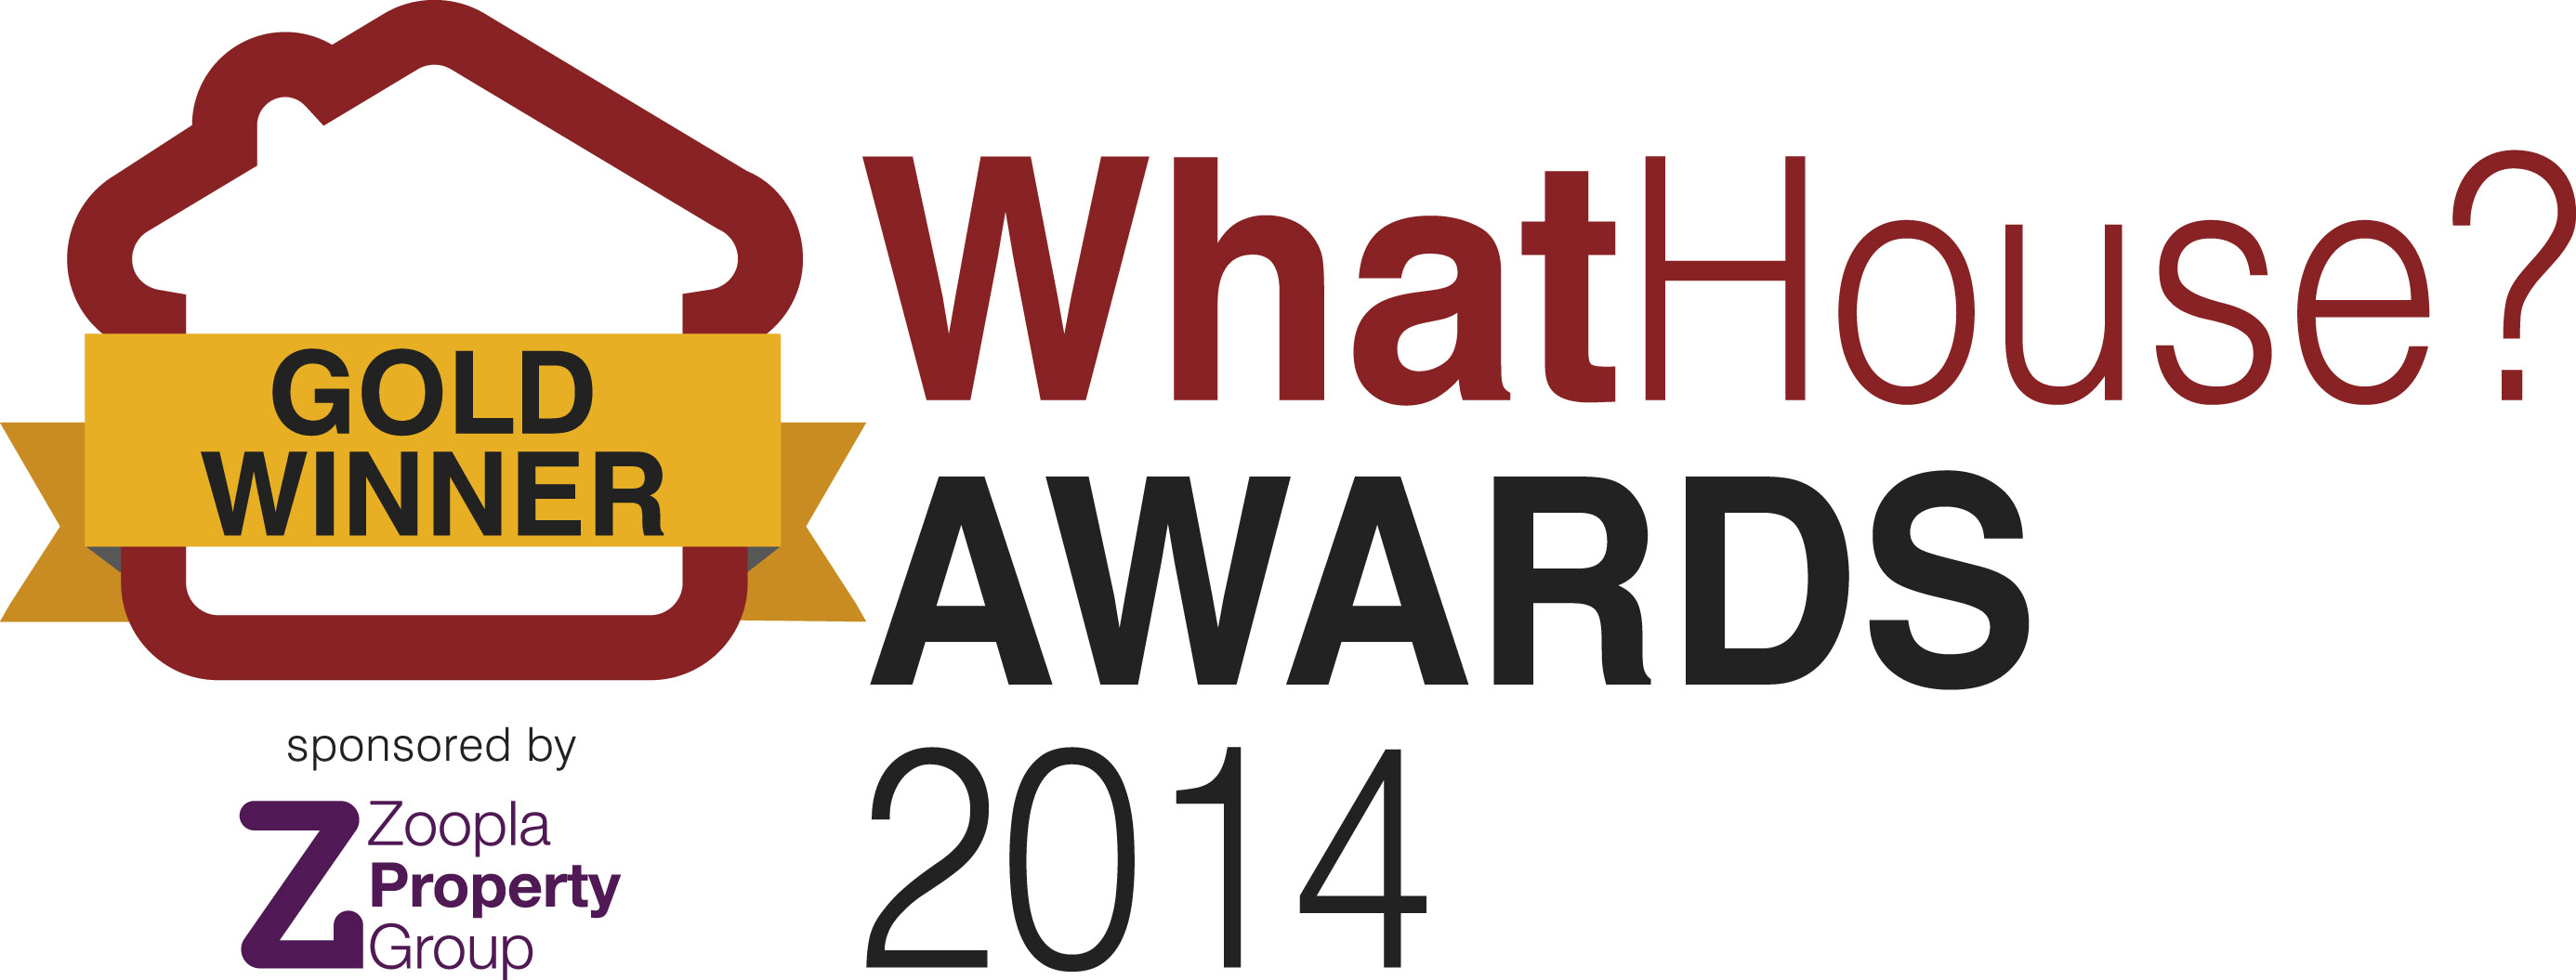 WhatHouse? Awards Winner Gold 2014